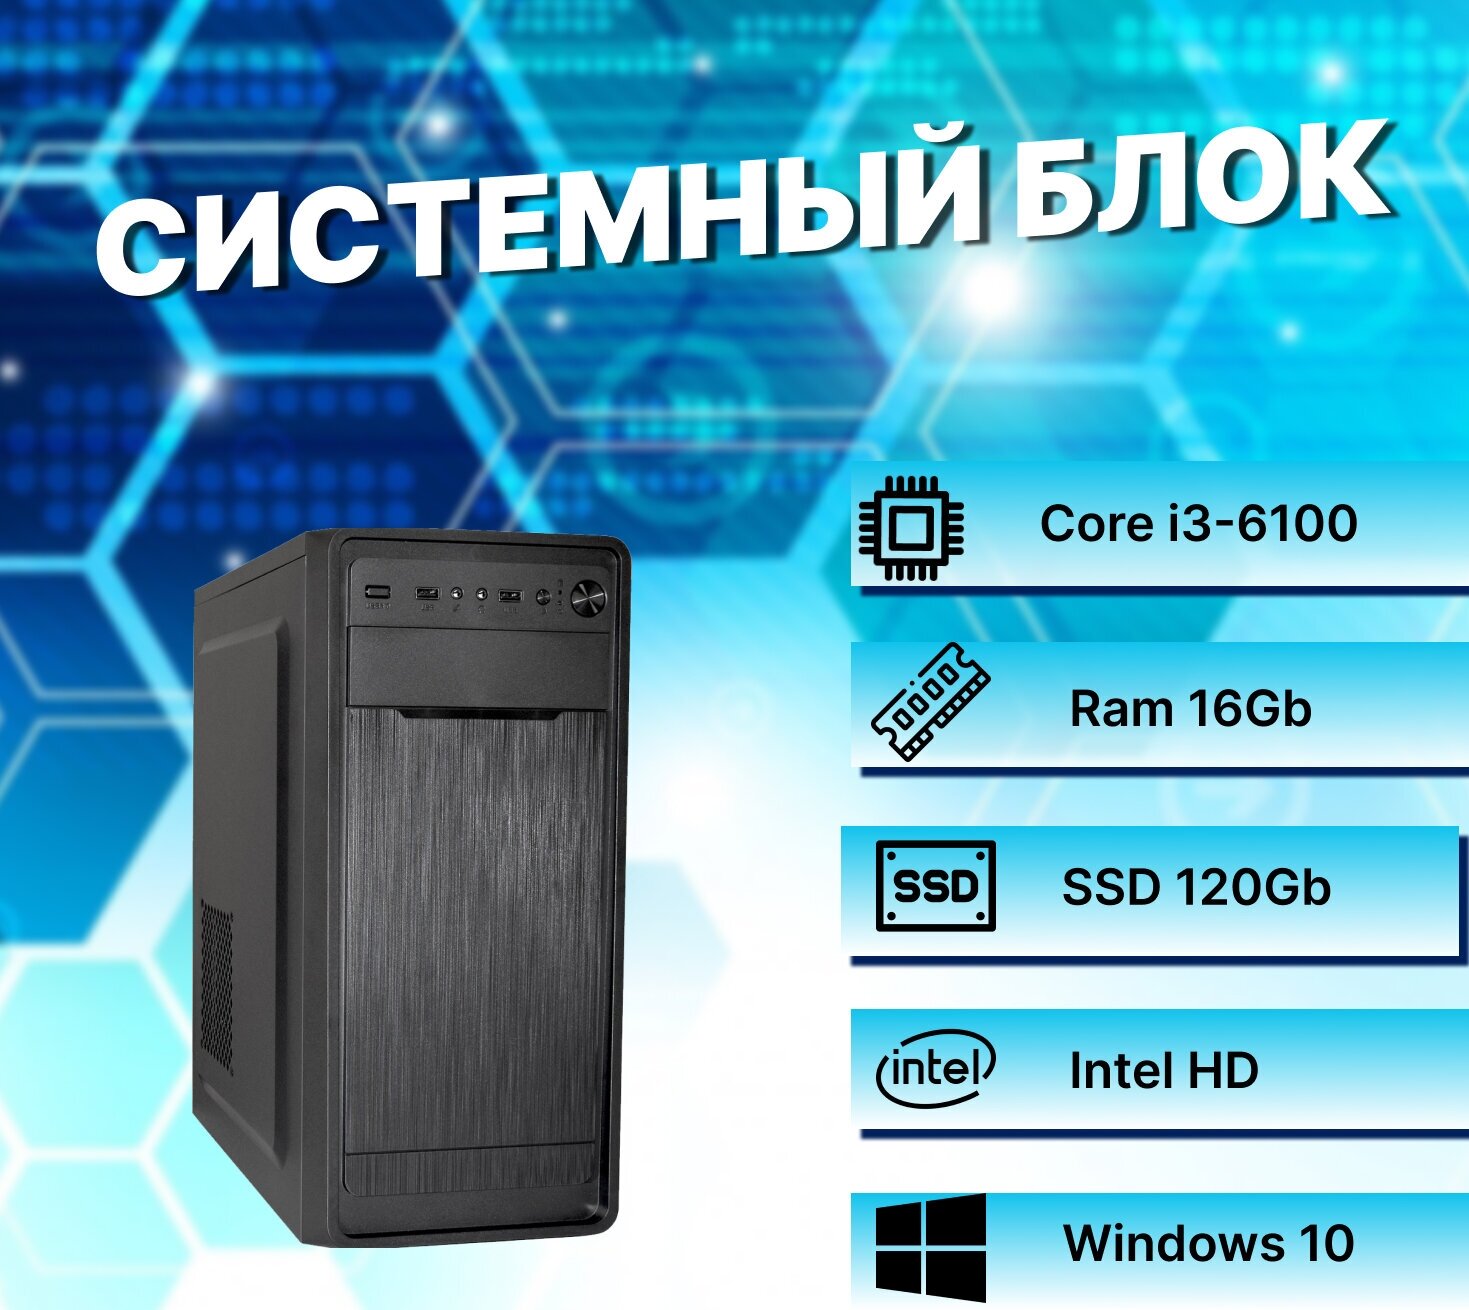 Системный блок Intel Core I3-6100 (3.7ГГц)/ RAM 16Gb/ SSD 120Gb/ Intel HD/ Windows 10 Pro